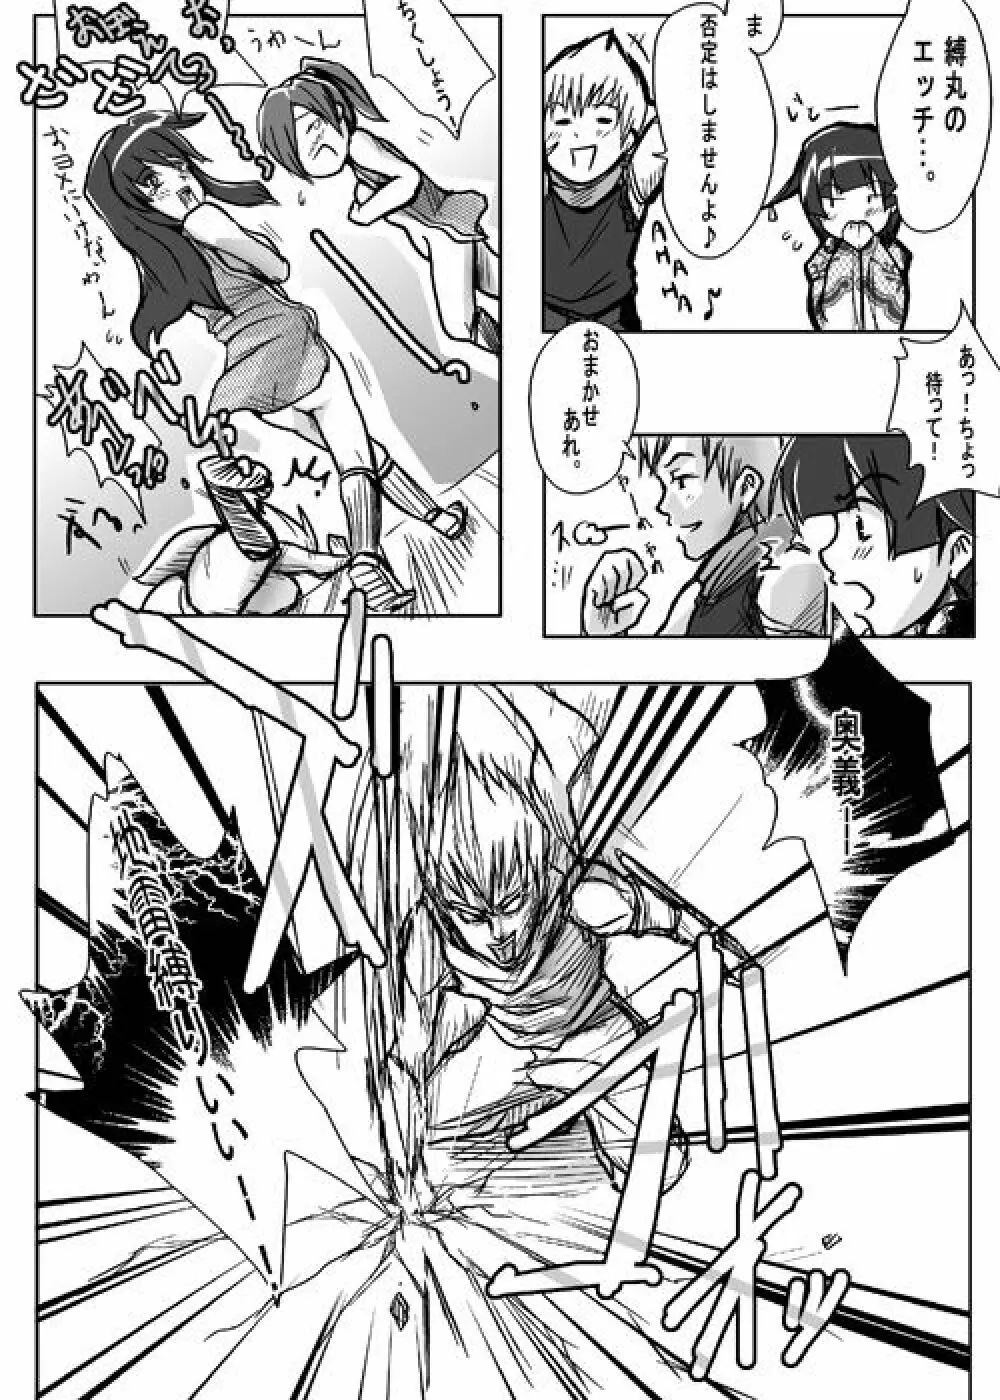 Same-themed manga about kid fighting female ninjas from japanese imageboard. 54ページ